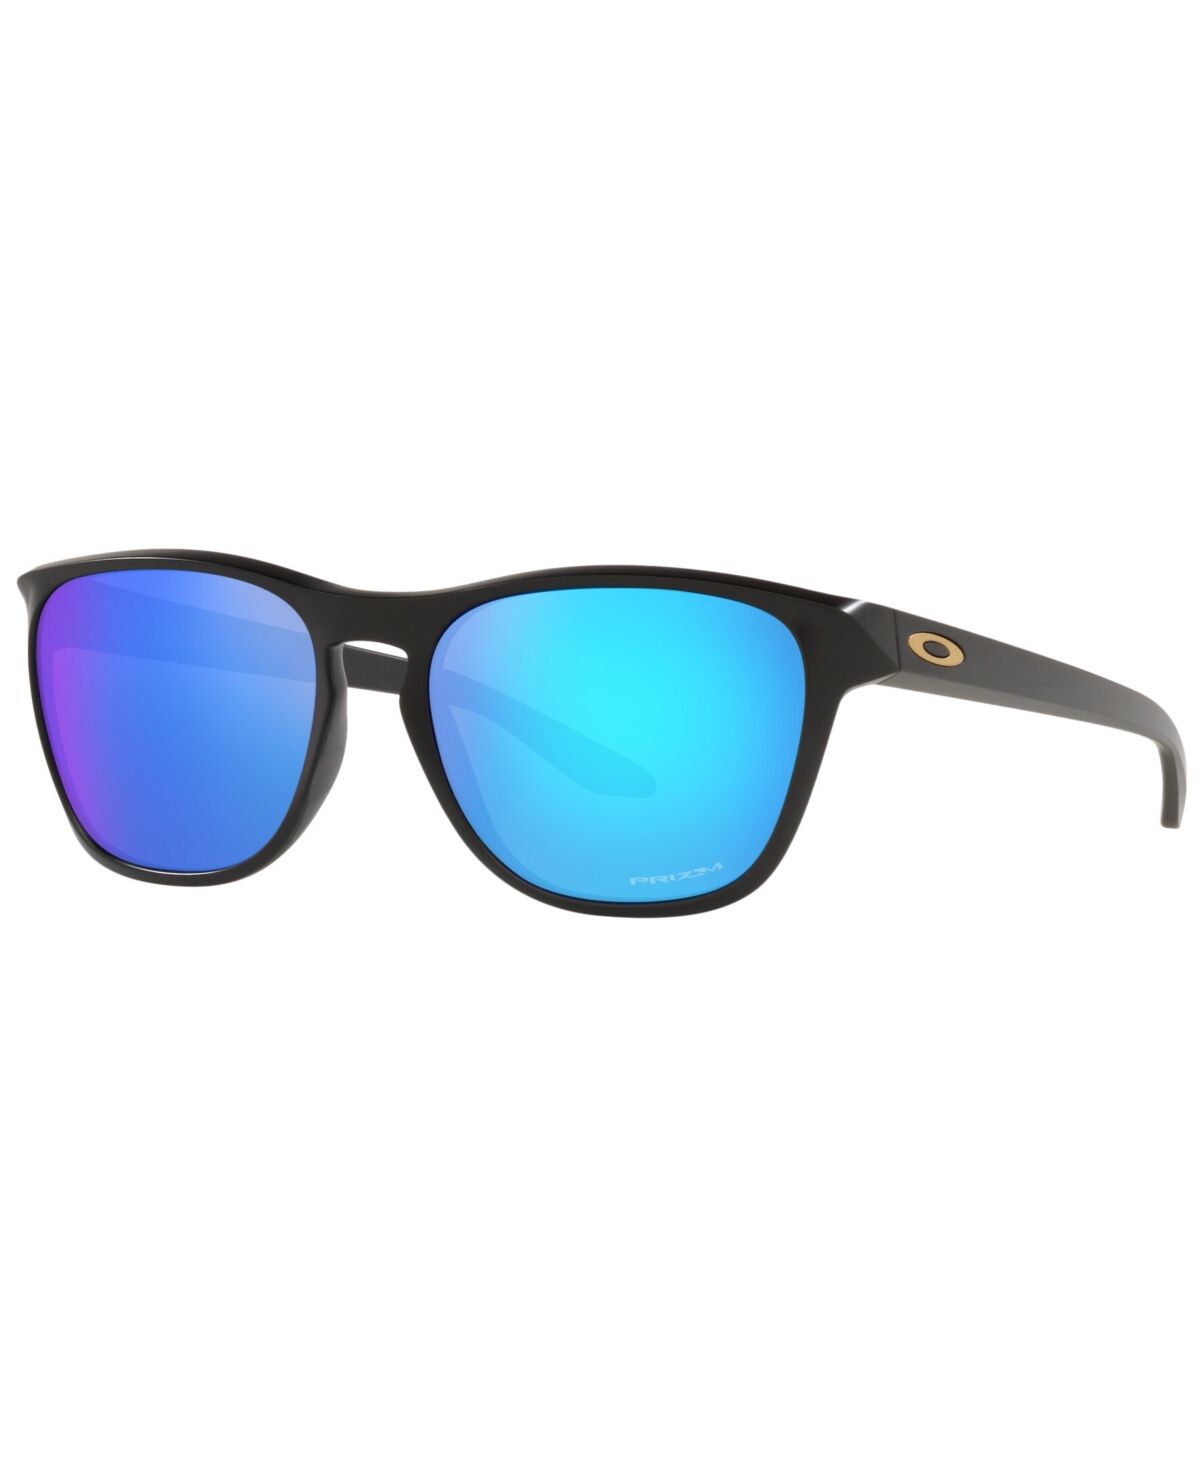 Oakley Men's Sunglasses, OO9479 Manorburn 56 - Matte Black